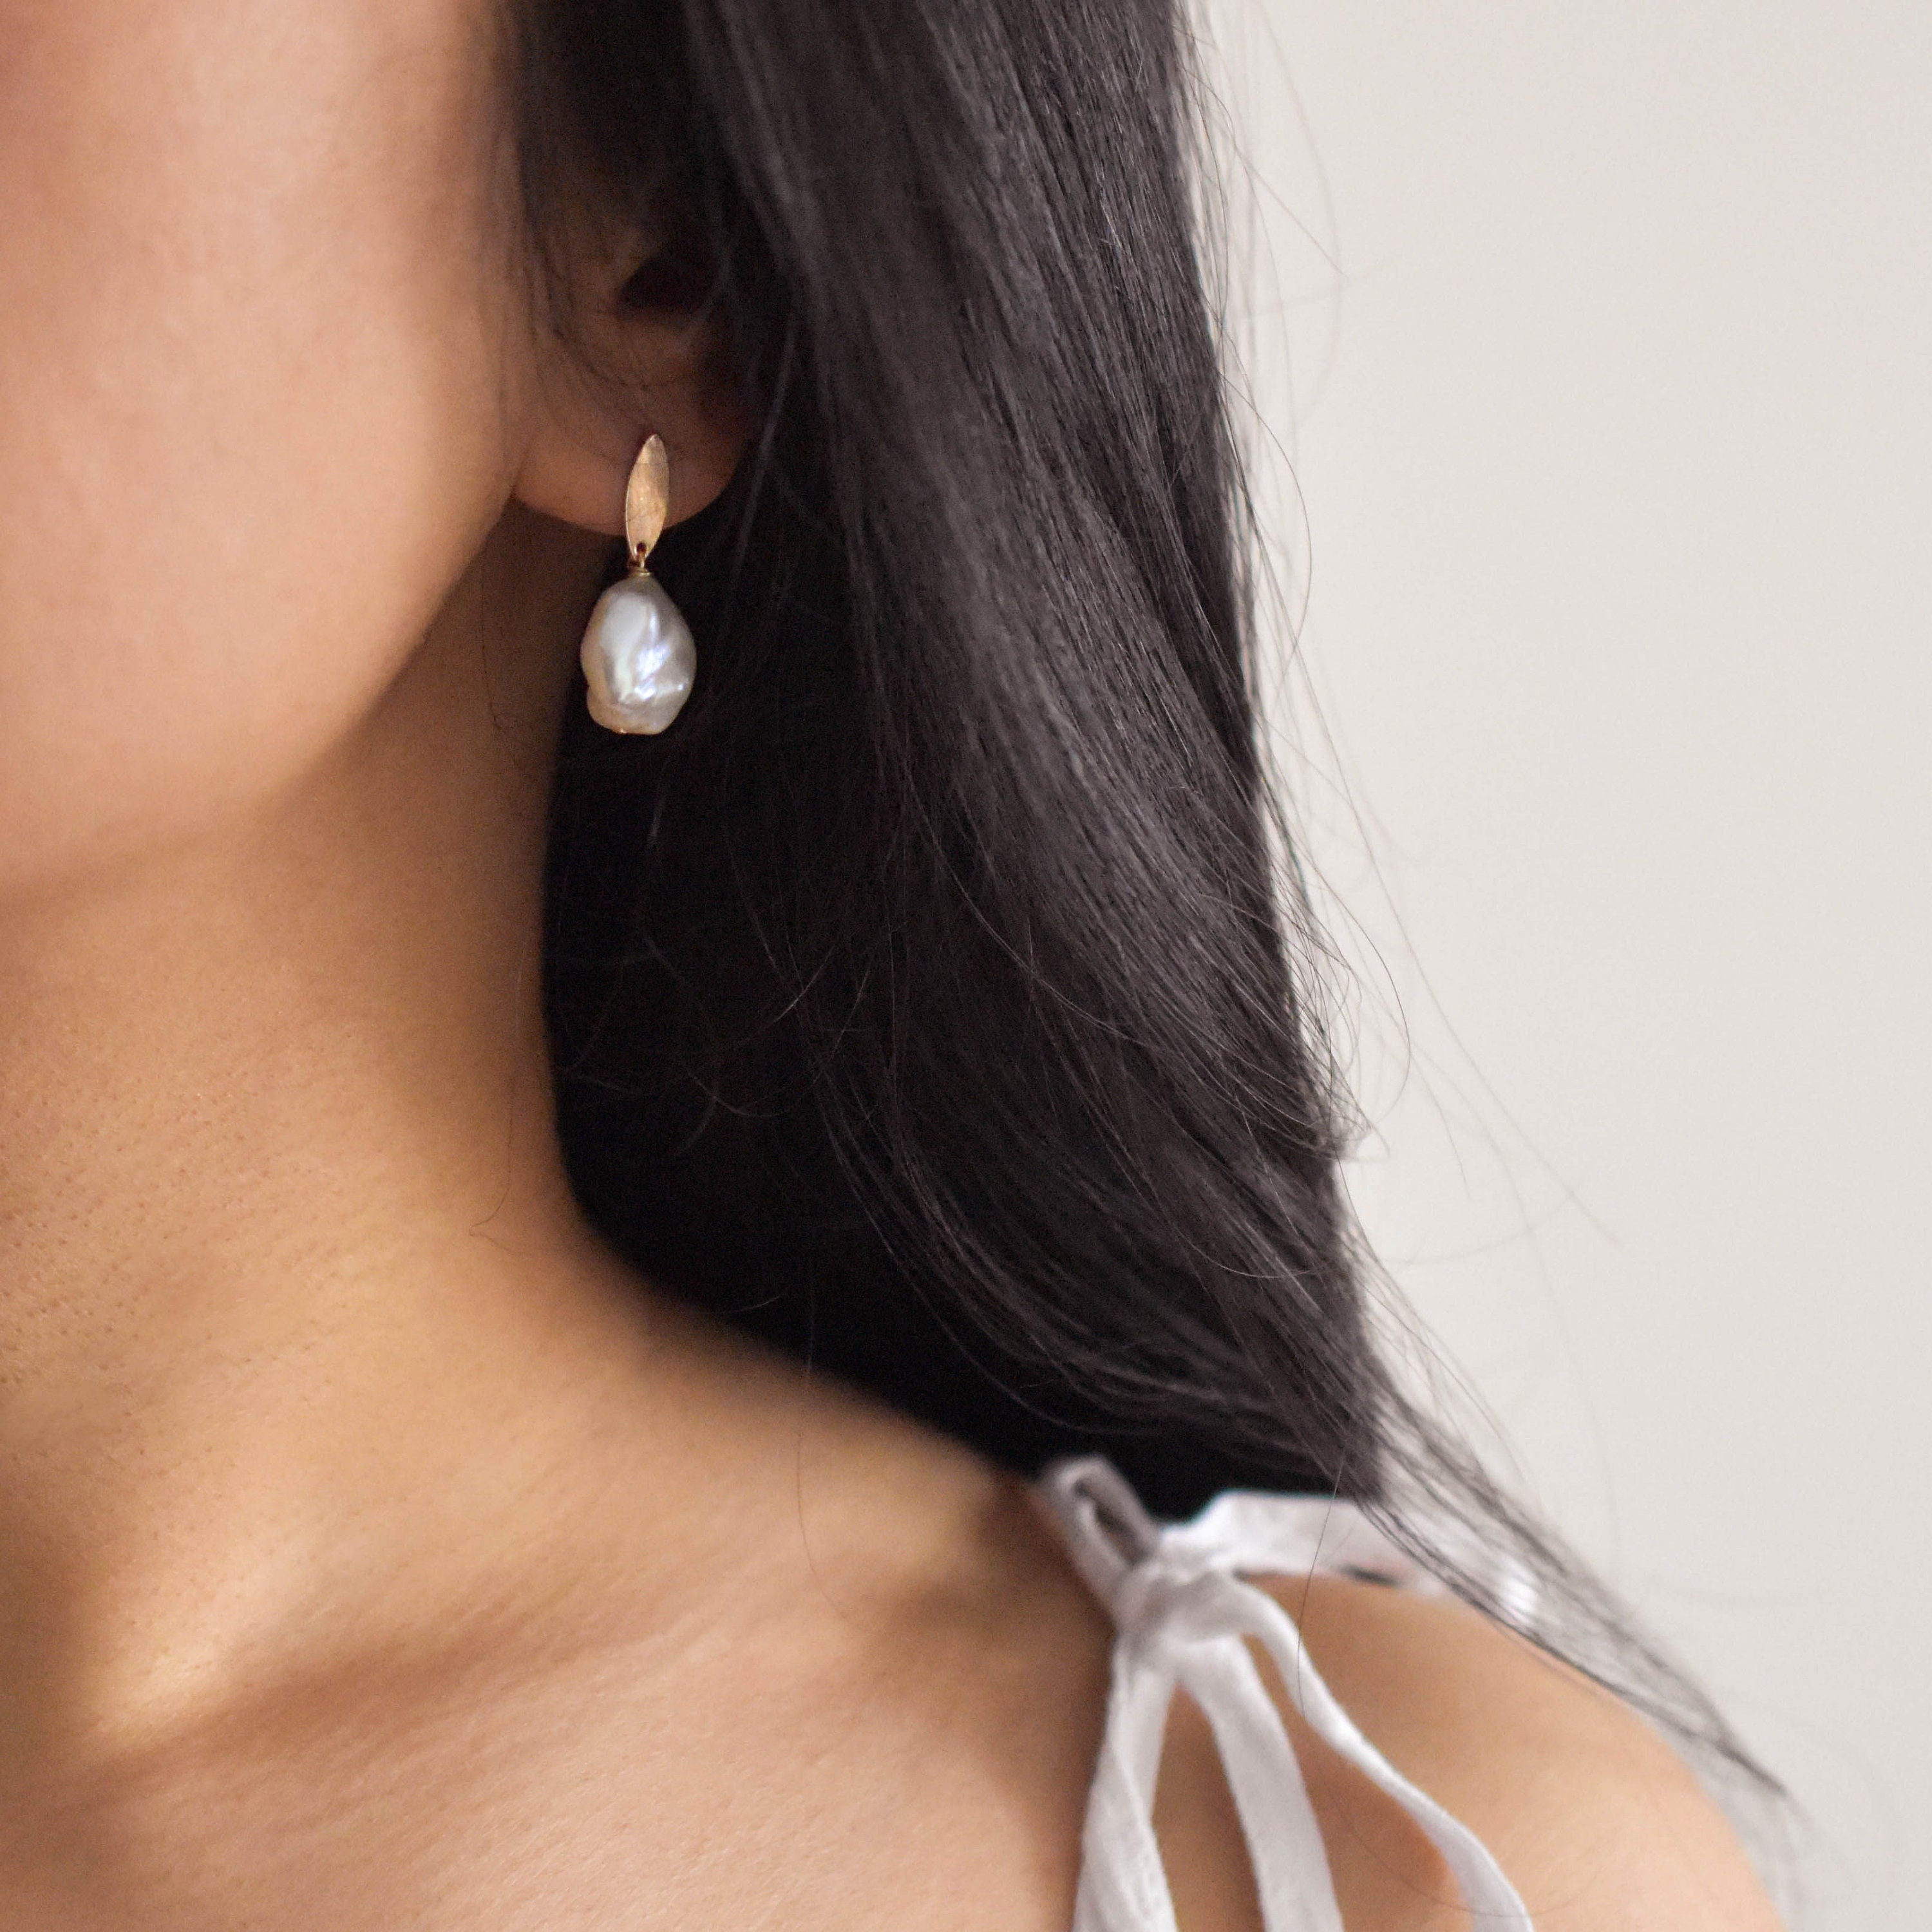 Baroque Pearl Earrings - Real Pearl Earrings, Freshwater Pearl Earrings, Bridal earrings, Dressy Earrings, Evening Earrings |GFE00050